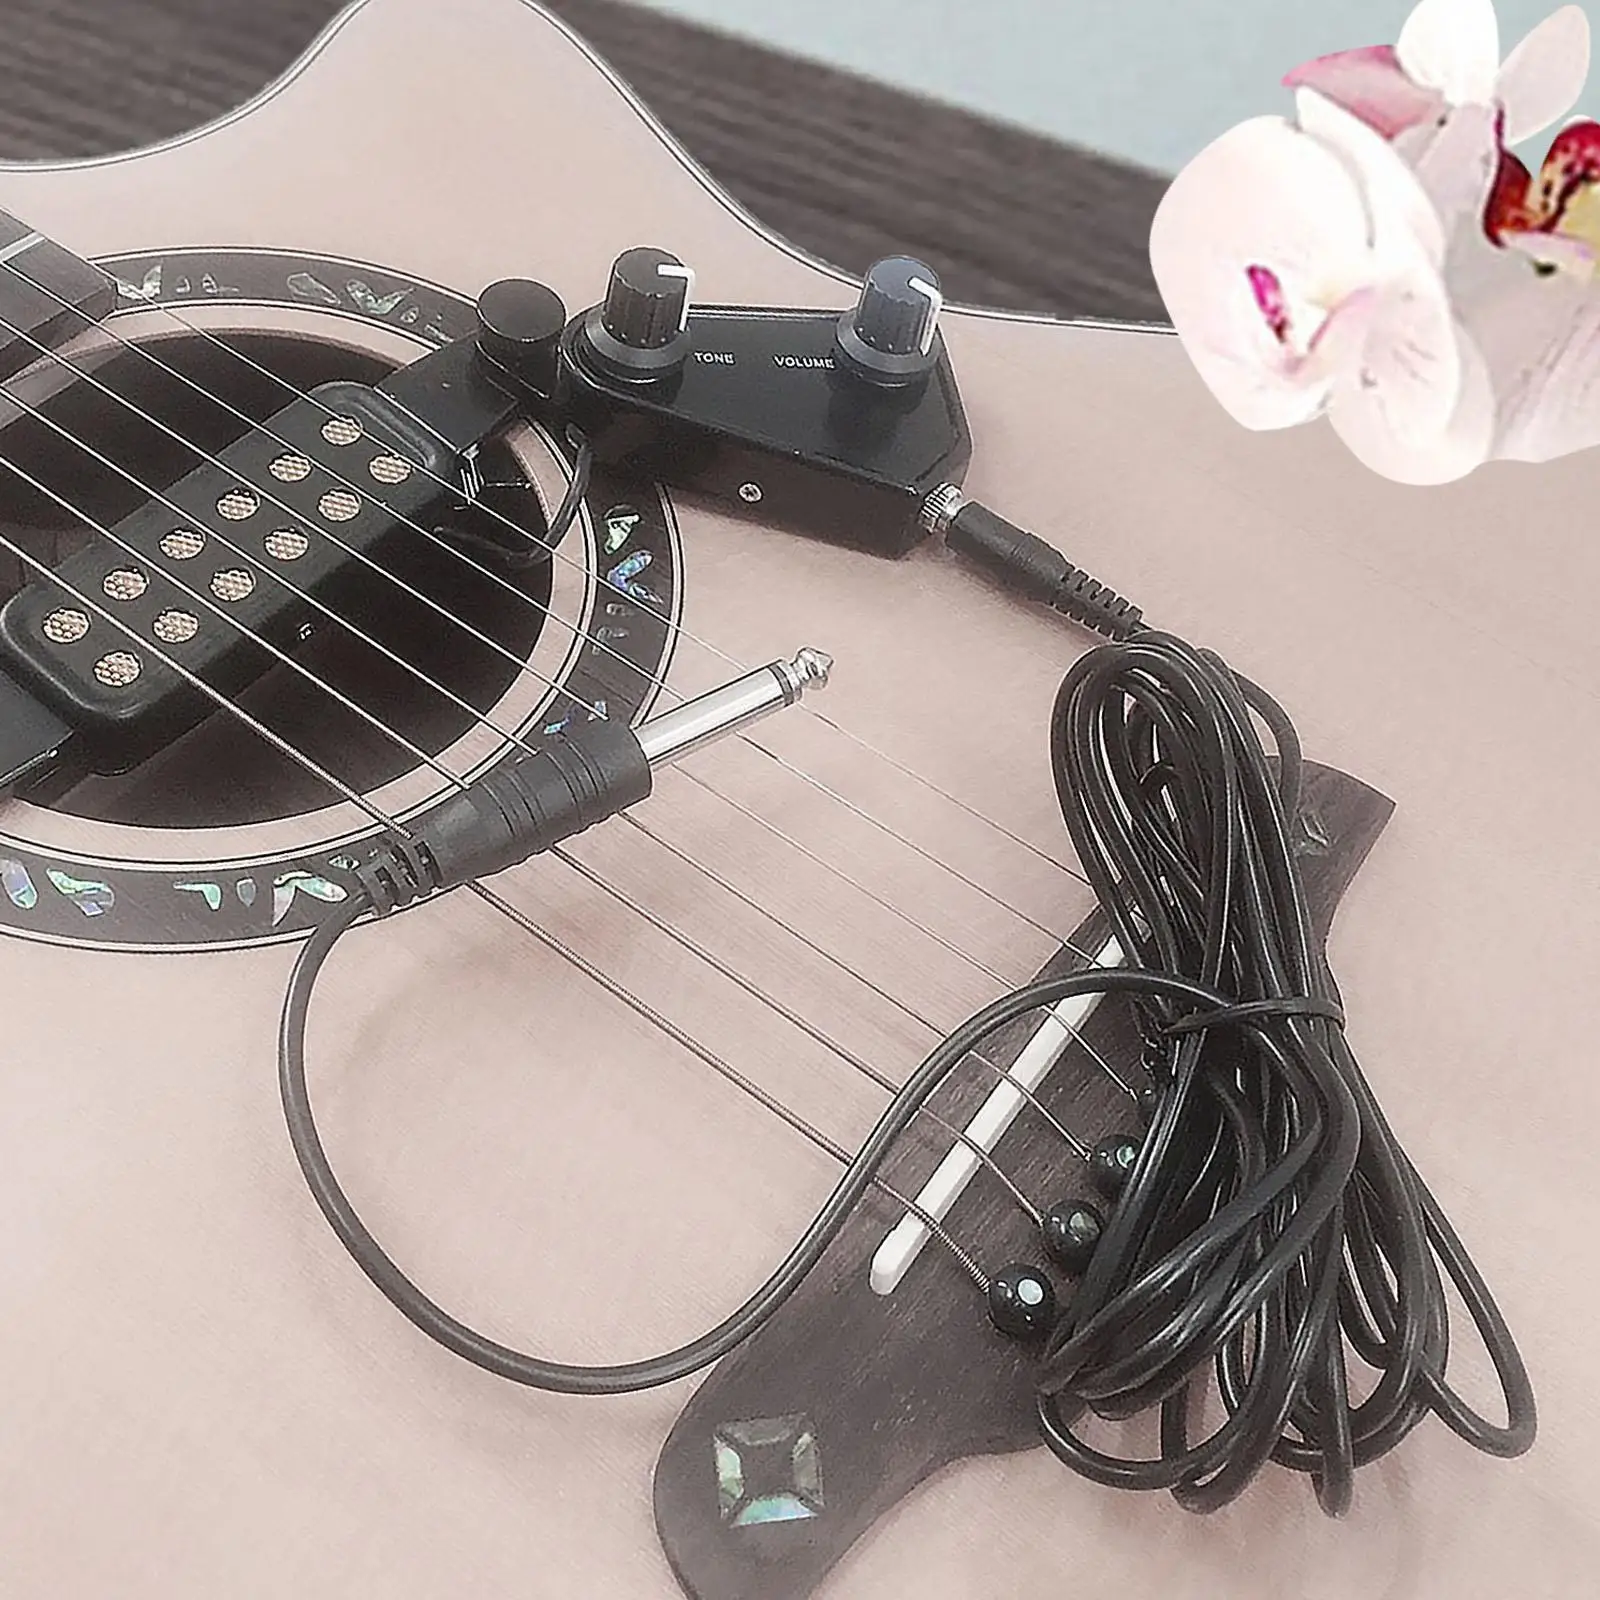 Professional Bridge Pickup Violin Accessories with Volume Knob and Volume Acoustic Guitar Pickup Guitar Bridge Pickup